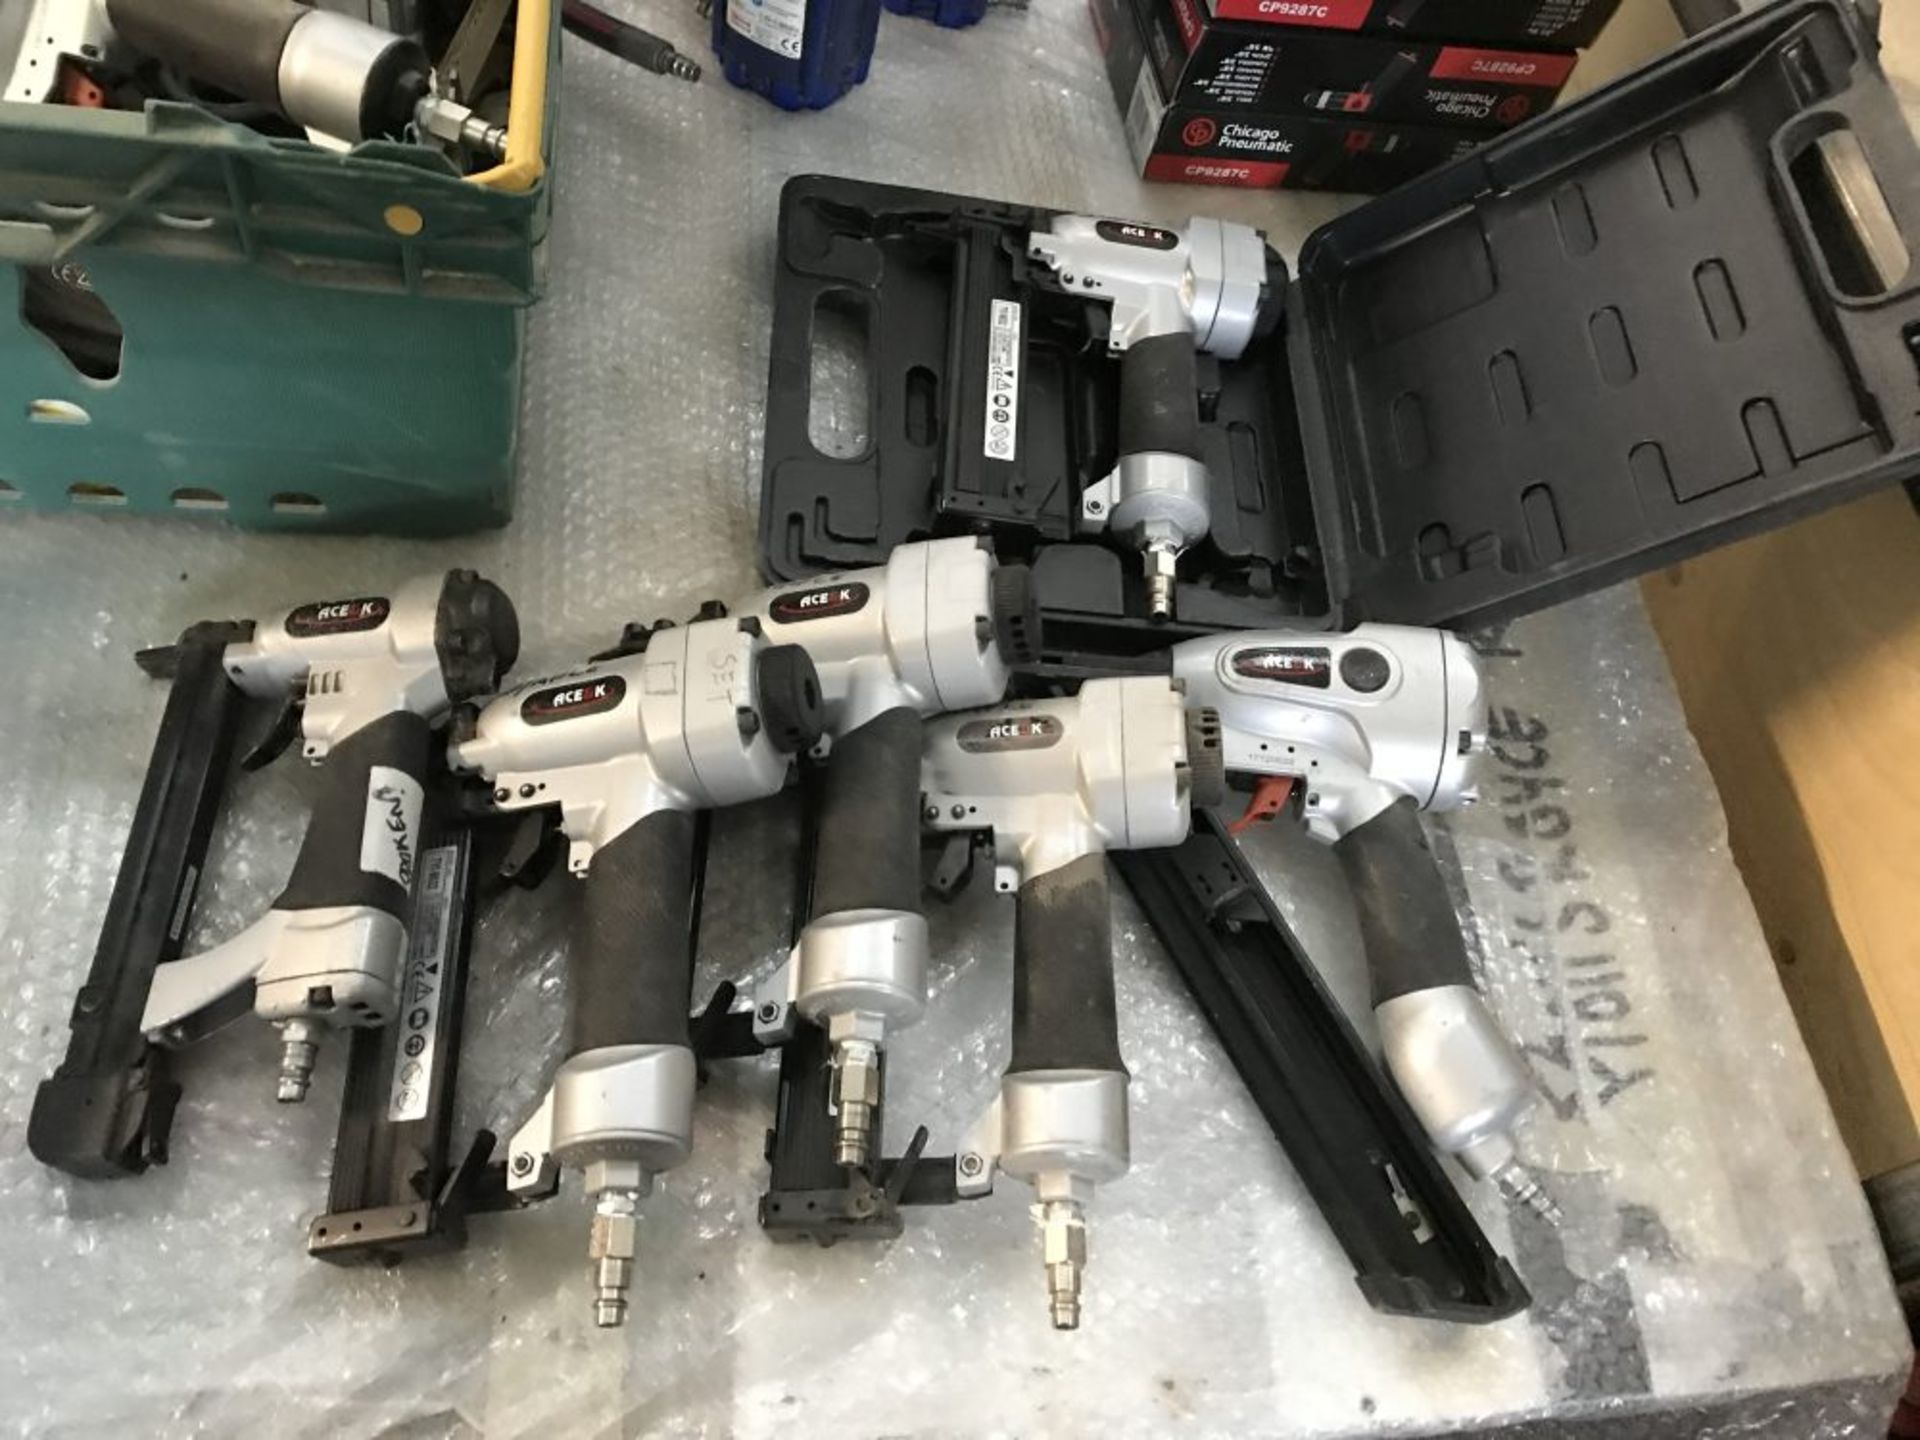 6 ACE&K air tools